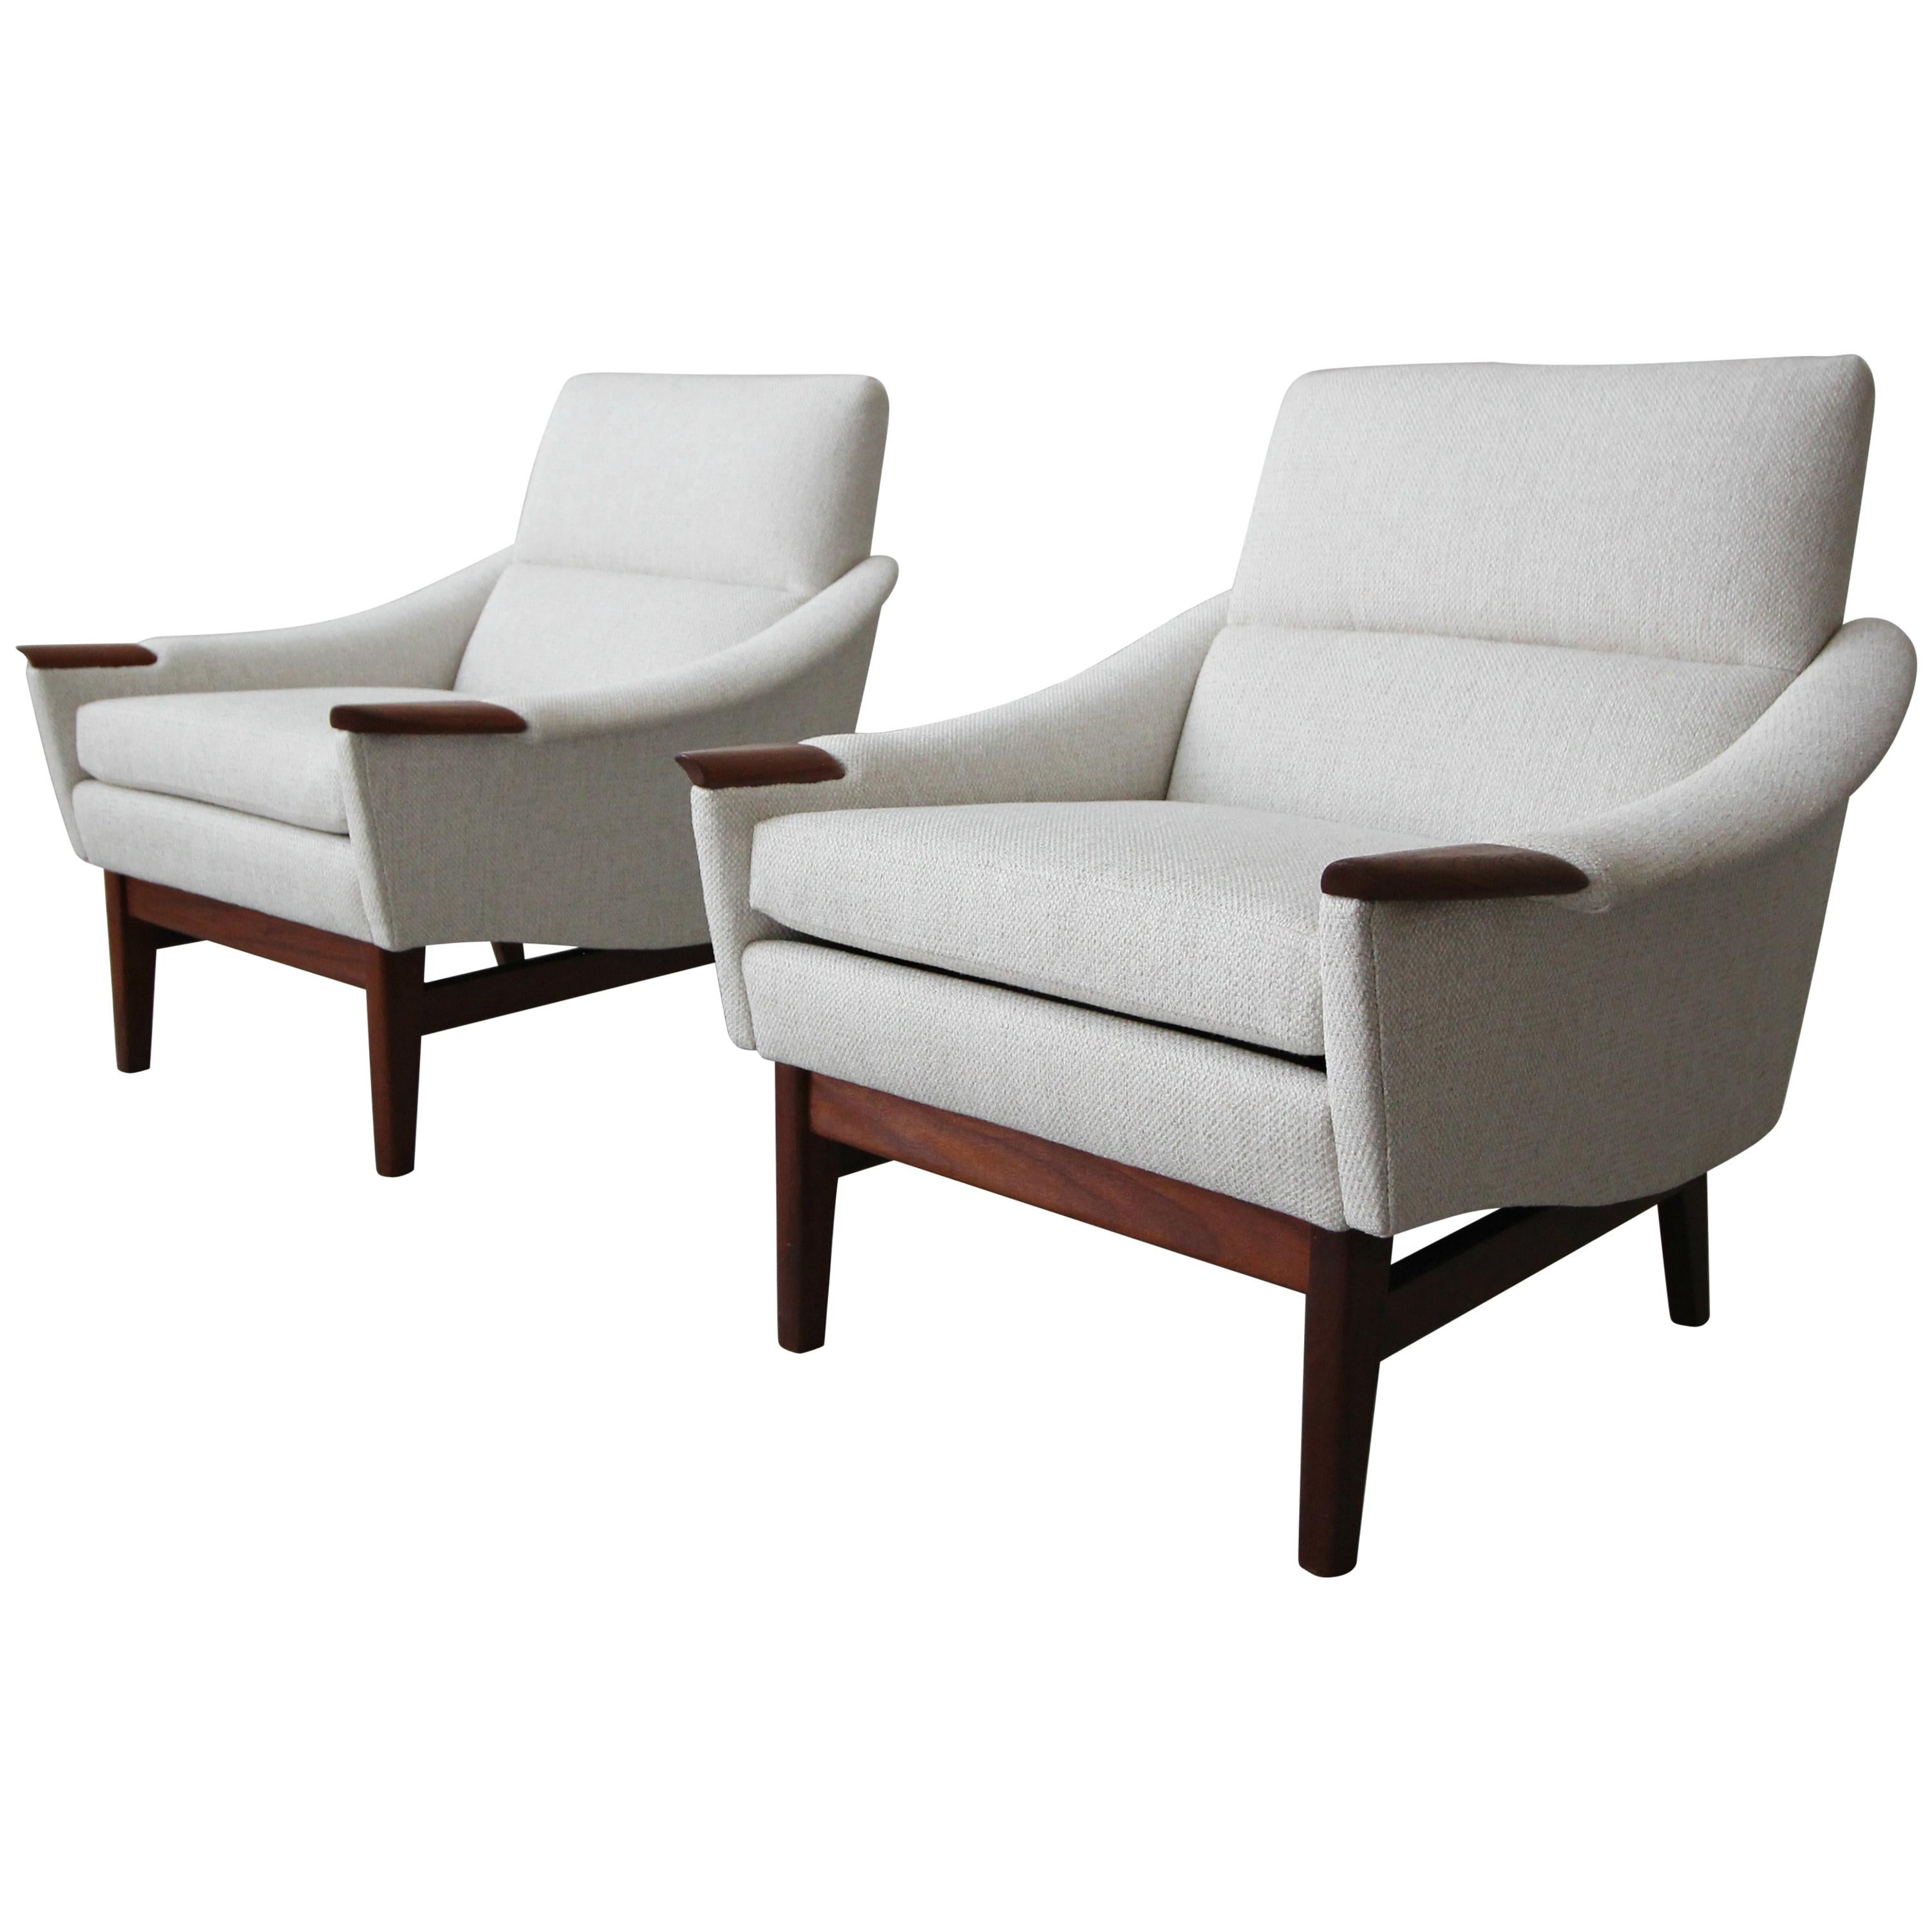 Pair of Midcentury Danish Style Lounge Chairs